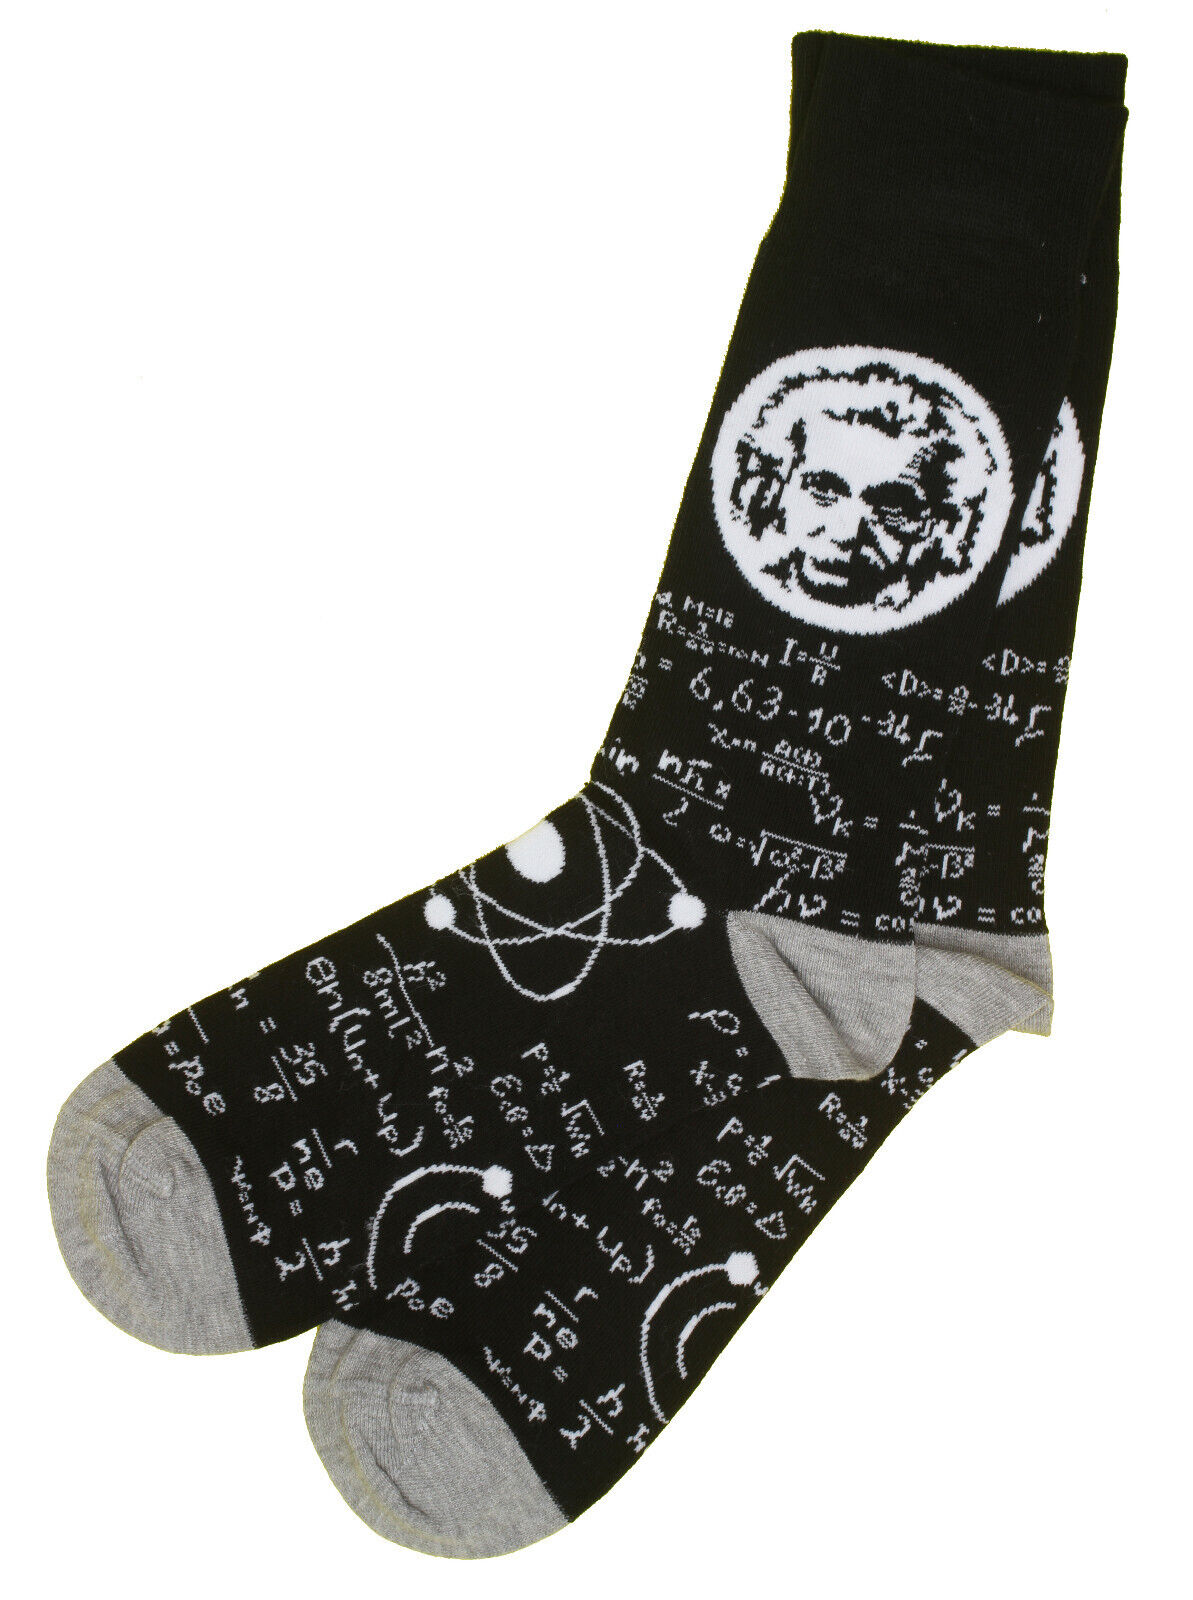 Albert Einstein Theory of Relativity Quantum Mechanics Themed Mid Calf Socks